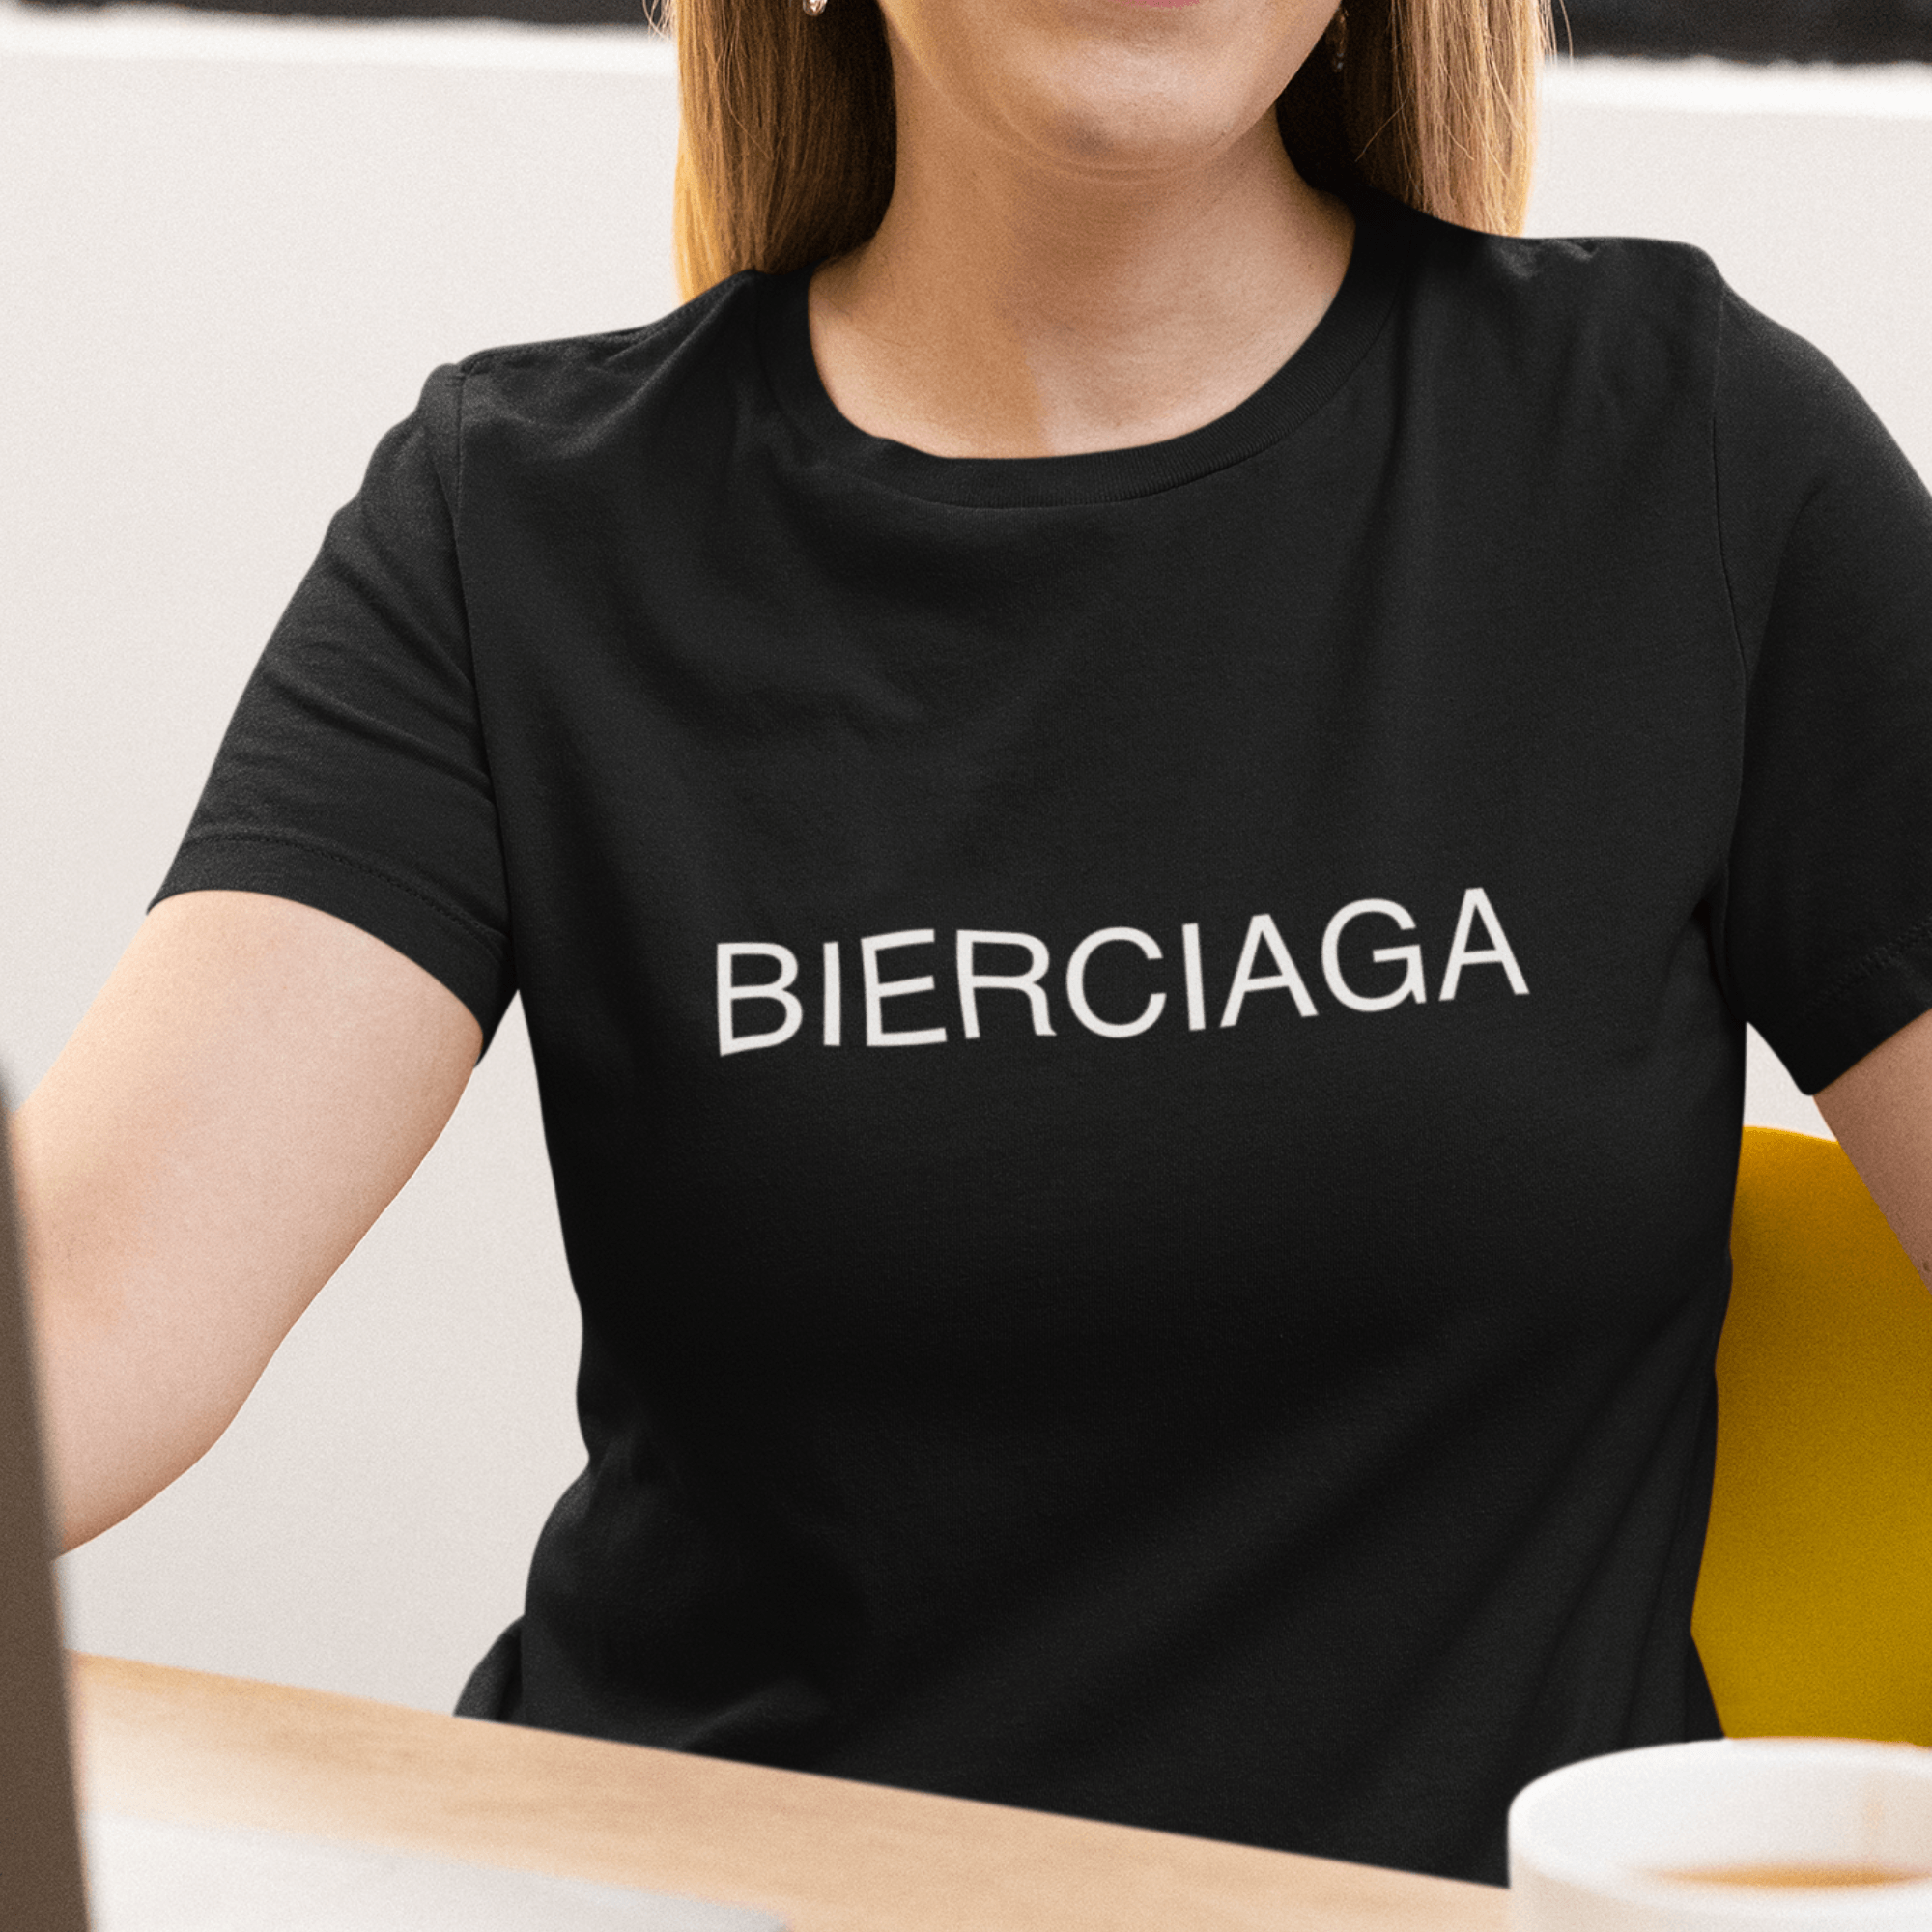 BIERCIAGA - Damen Premiumshirt - einschenken24.de